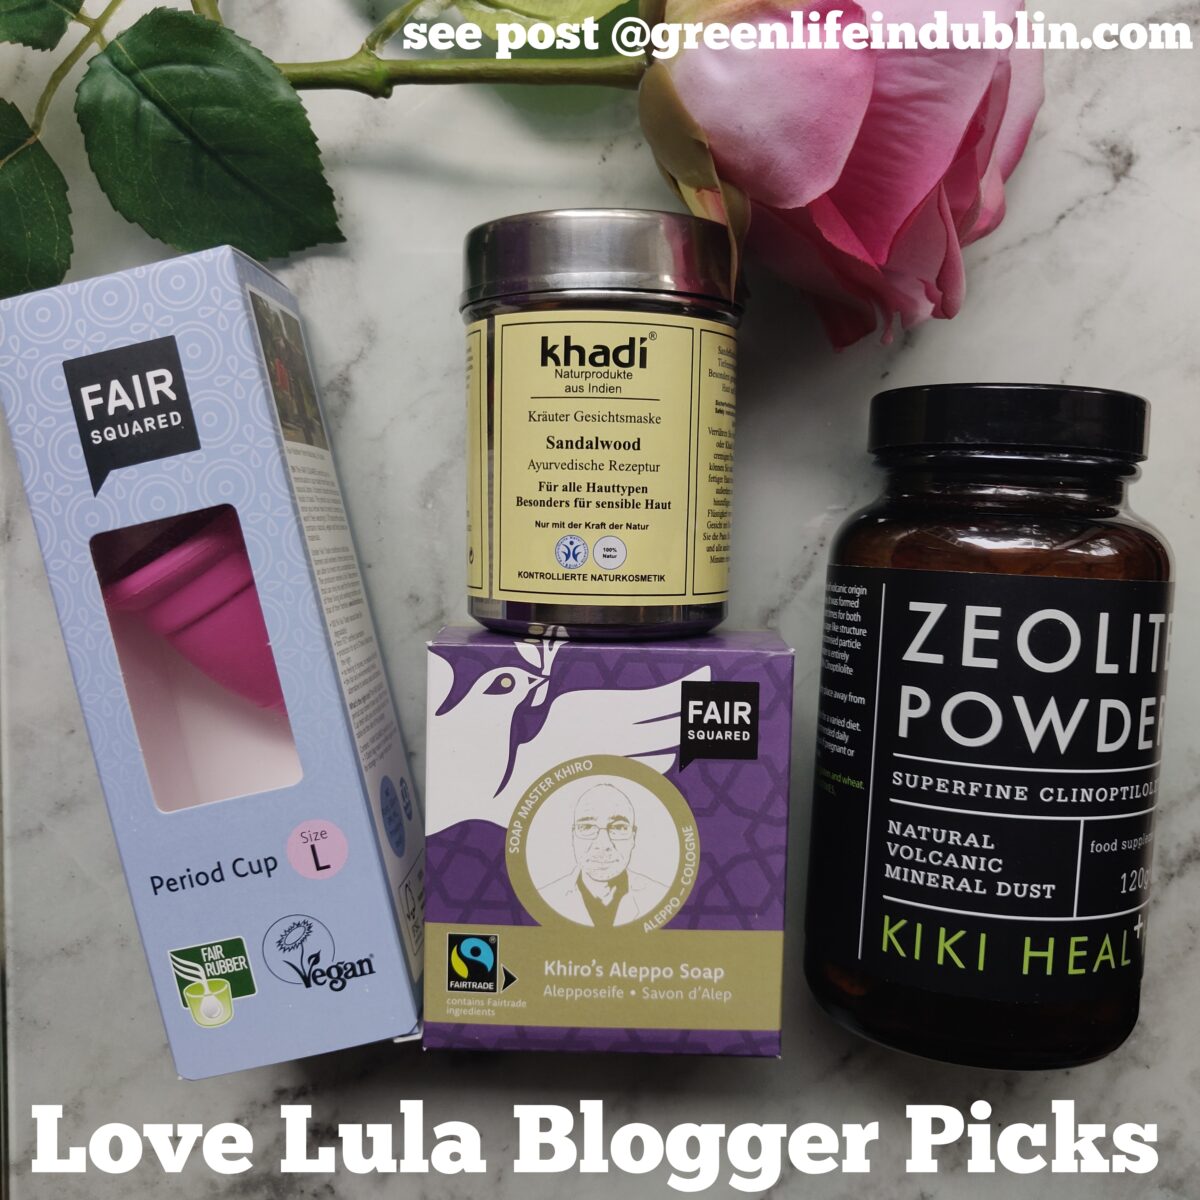 Love Lula Blogger Picks – Fair Squared, Khadi, Kiki Health [AD]